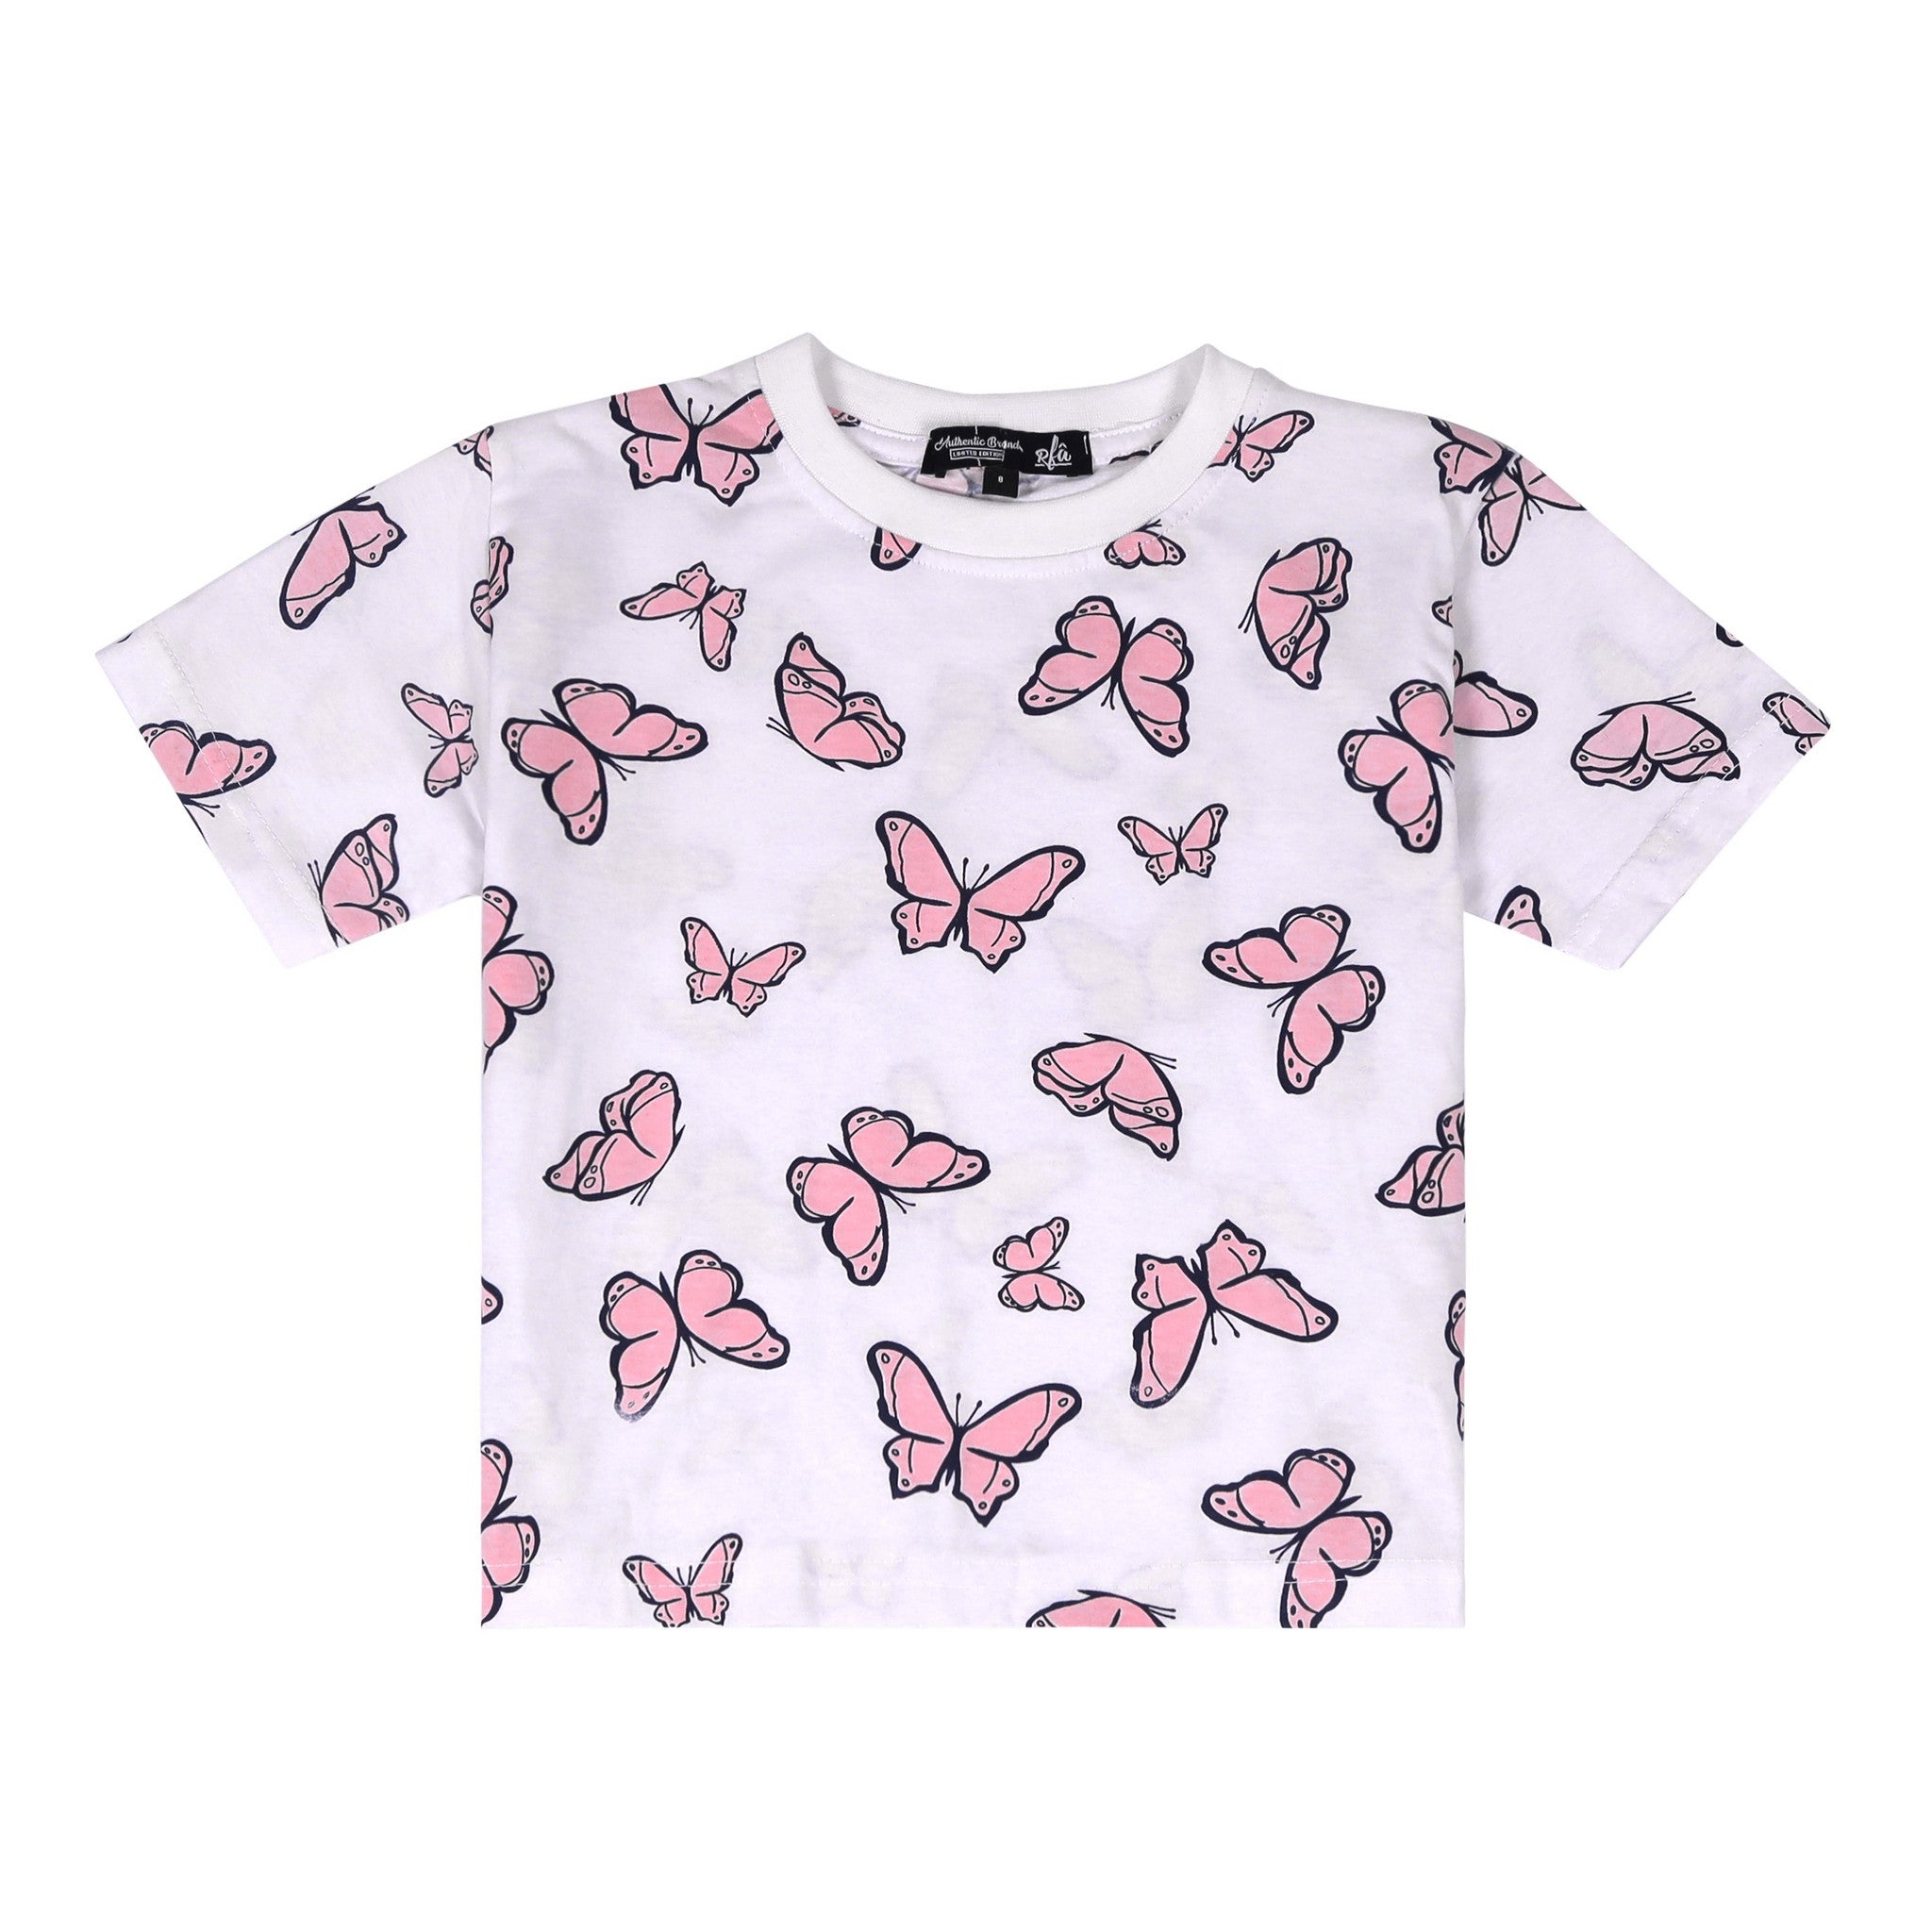 Butterfly Print White T-Shirt